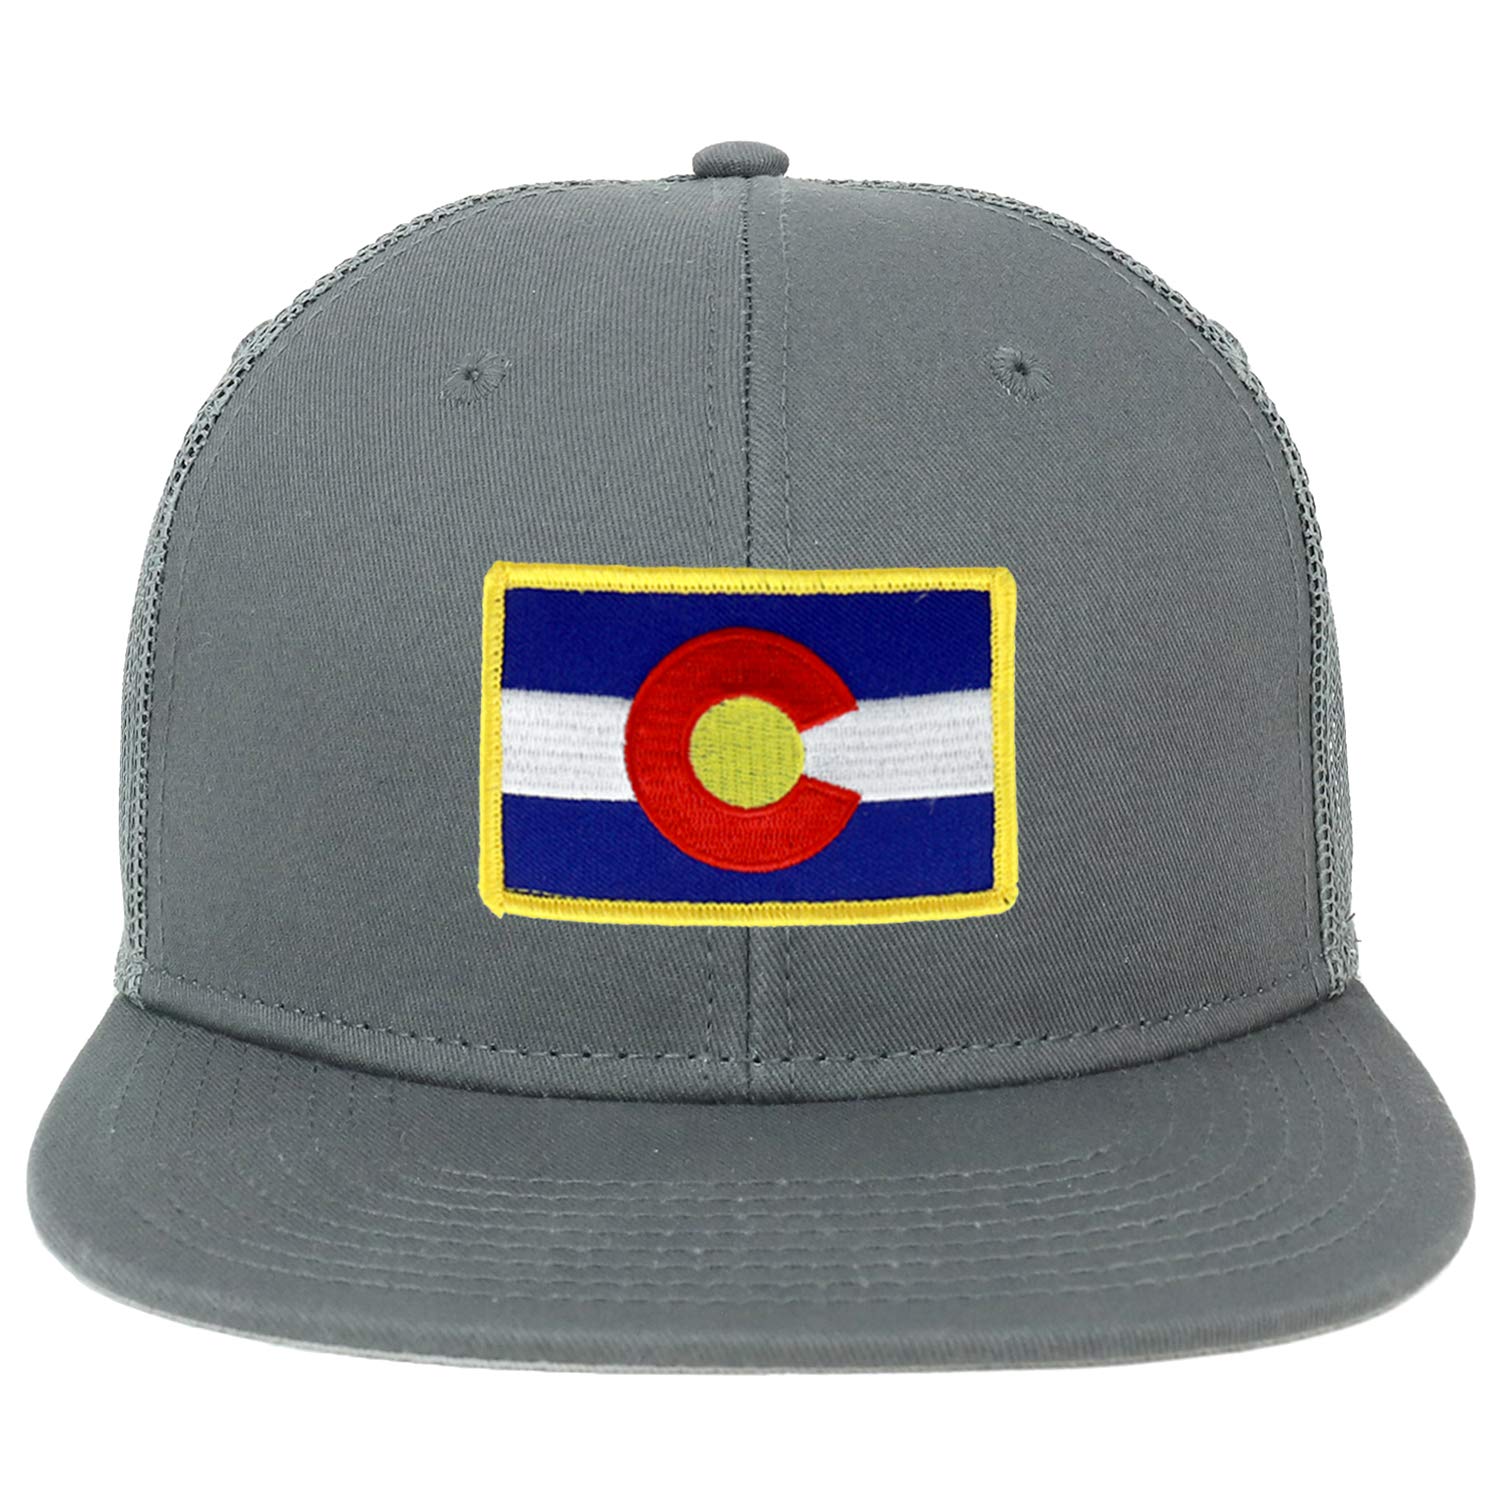 Armycrew Oversize XXL Colorado State Flag Patch Flatbill Mesh Snapback Cap - Black - 2XL